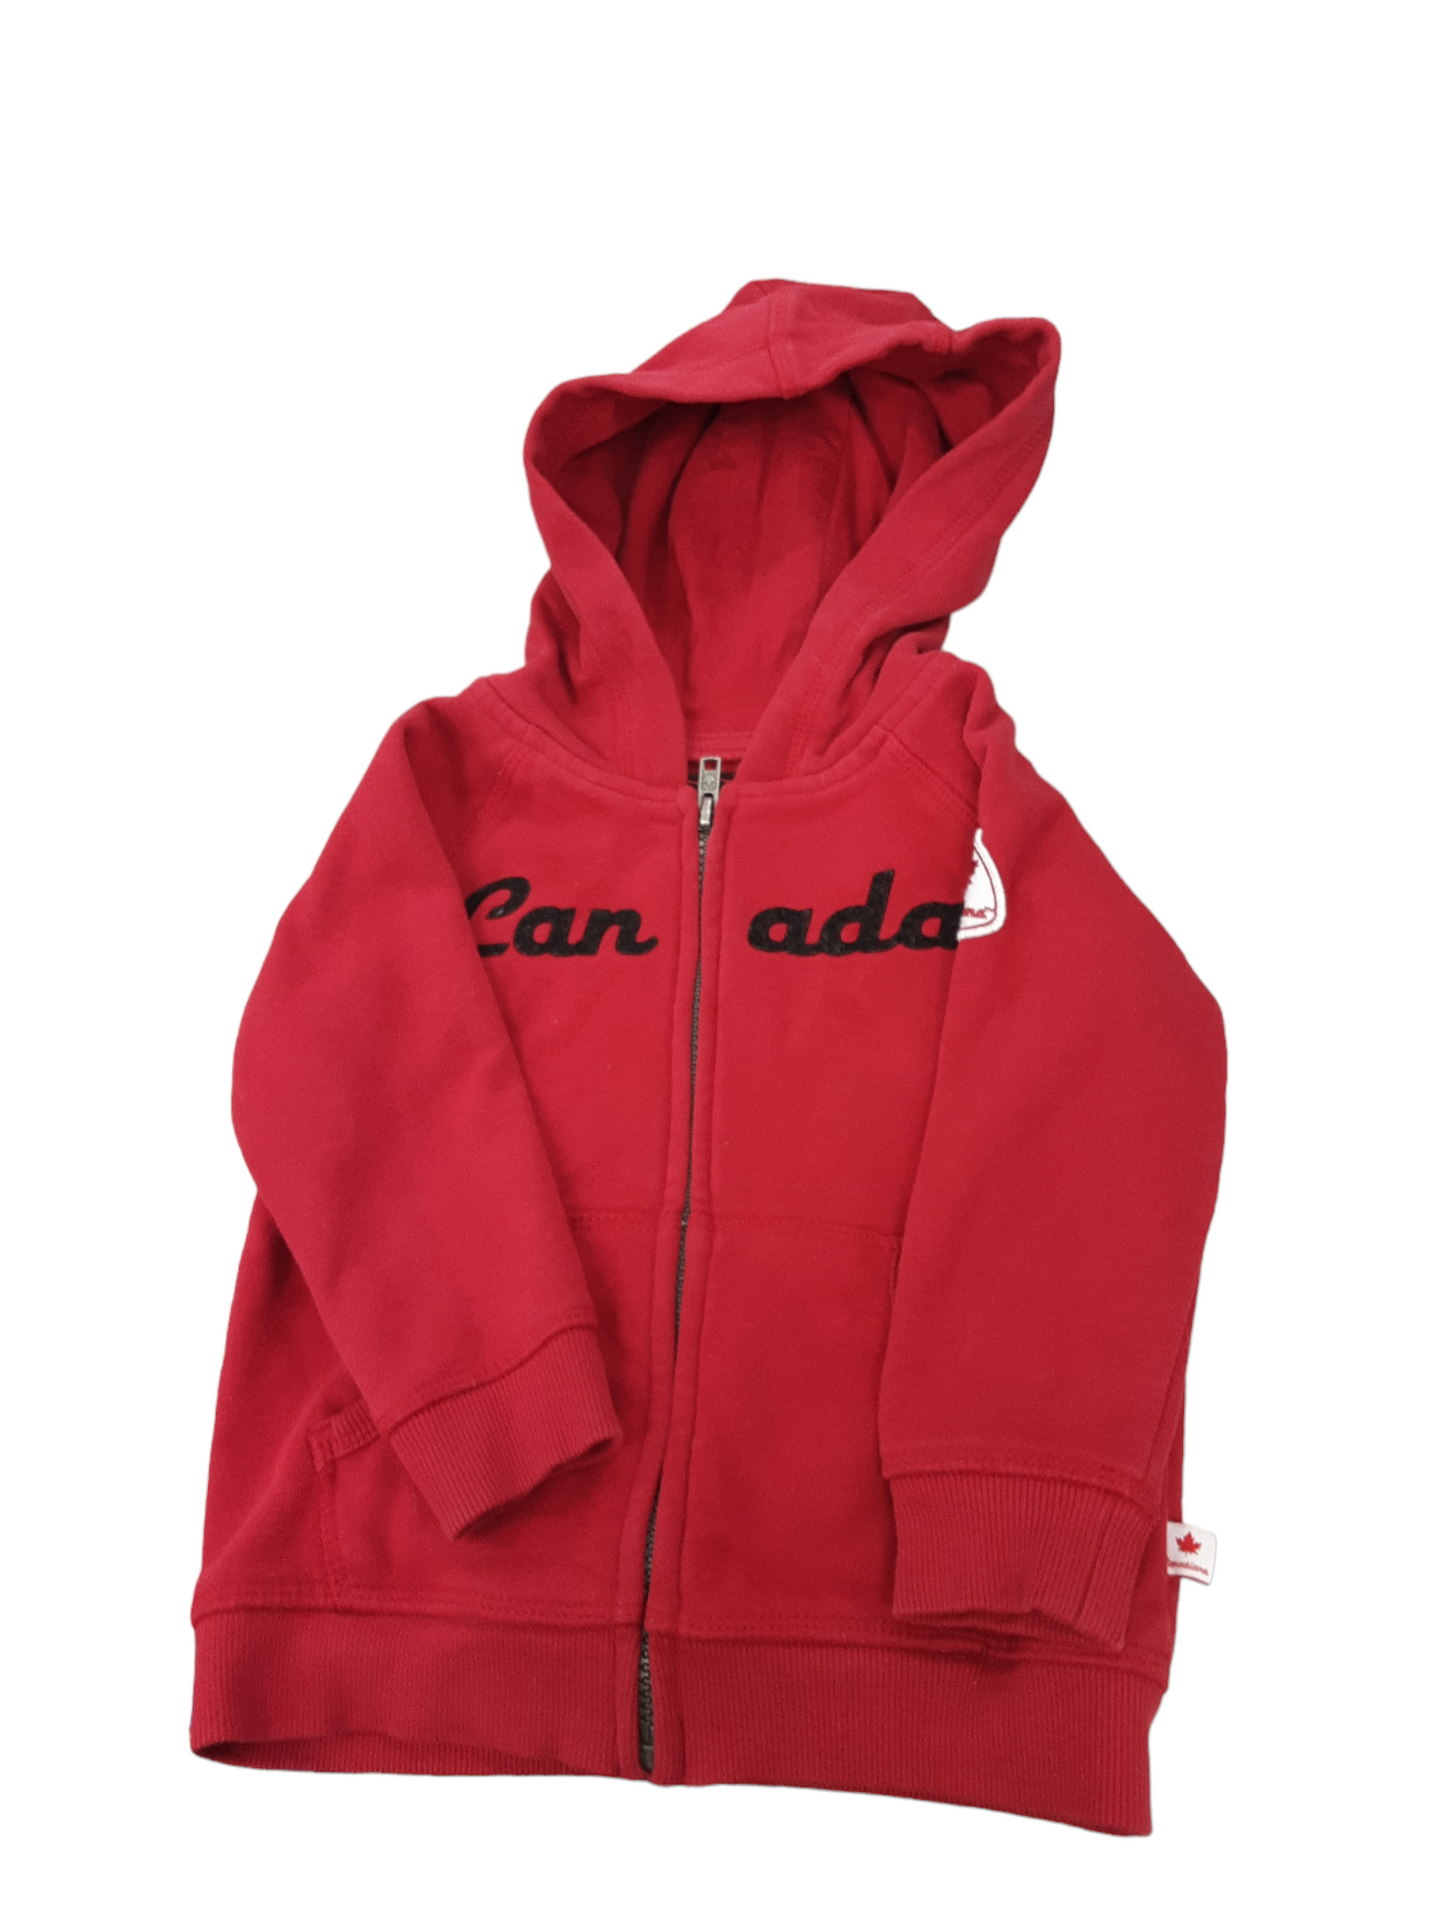 Cool canada hoodie 18-24m